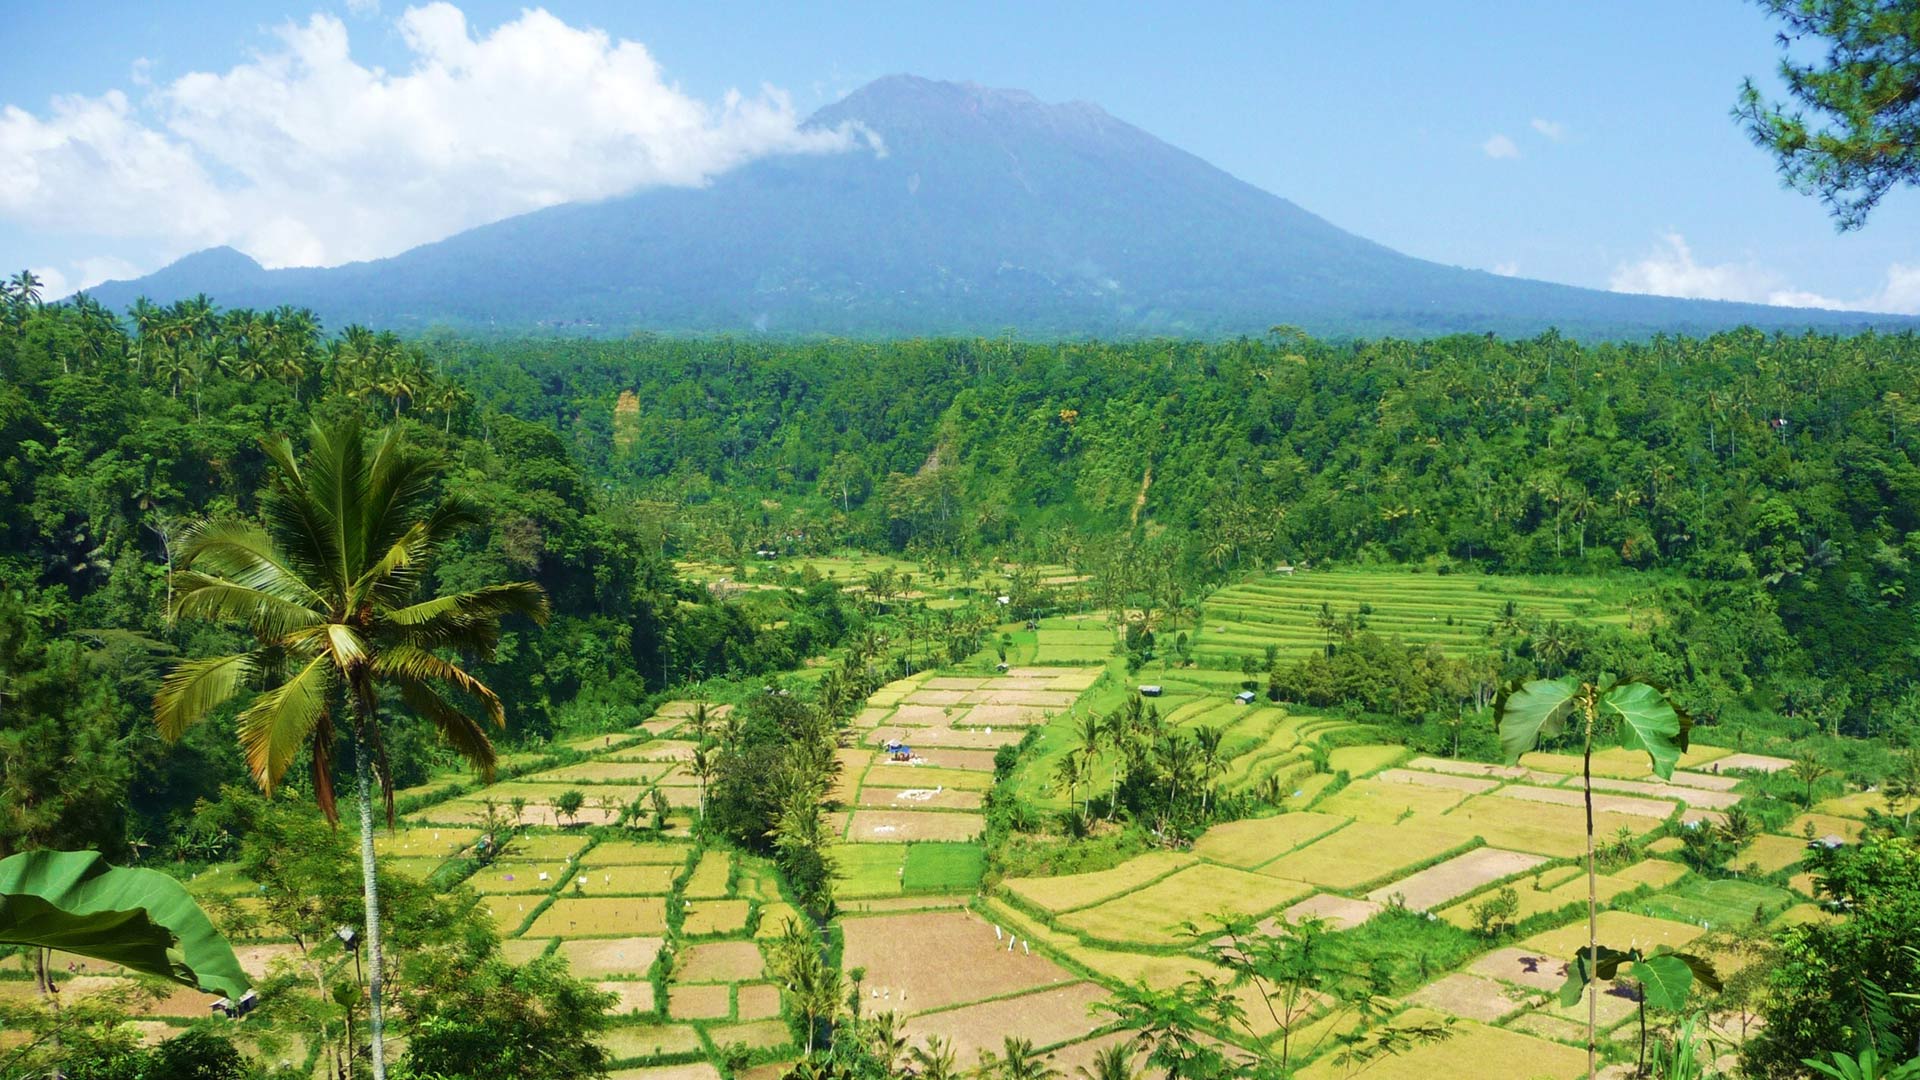 Mount Batur – Bali's most beautiful sunrise | Travel blog about